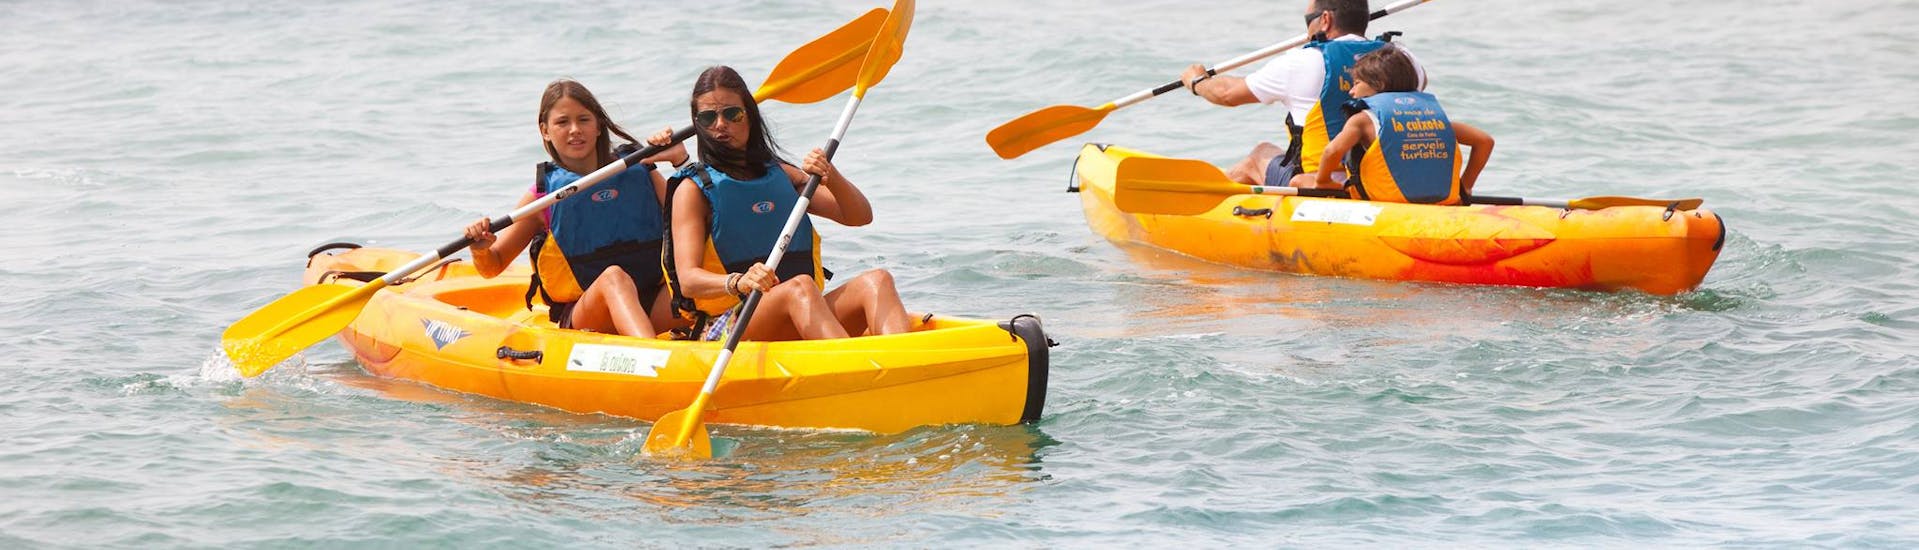 Leichte Kayak & Kanu-Tour in L'Ametlla de Mar.